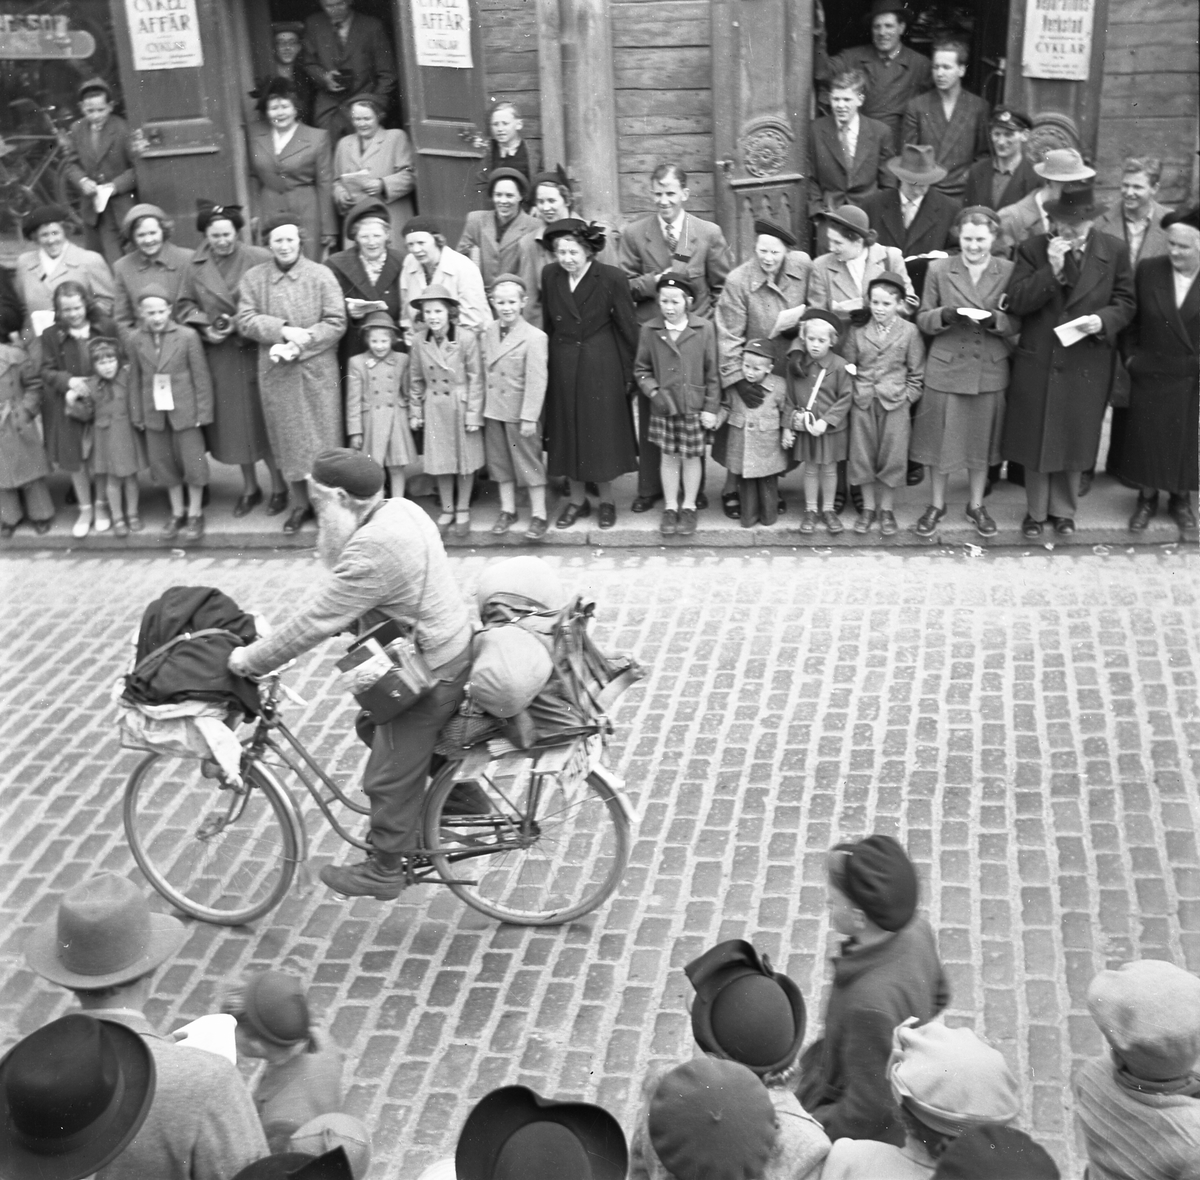 Orig. text: Majkarnevalen 1951.

Majgubbe på cykel, på Storgatan.